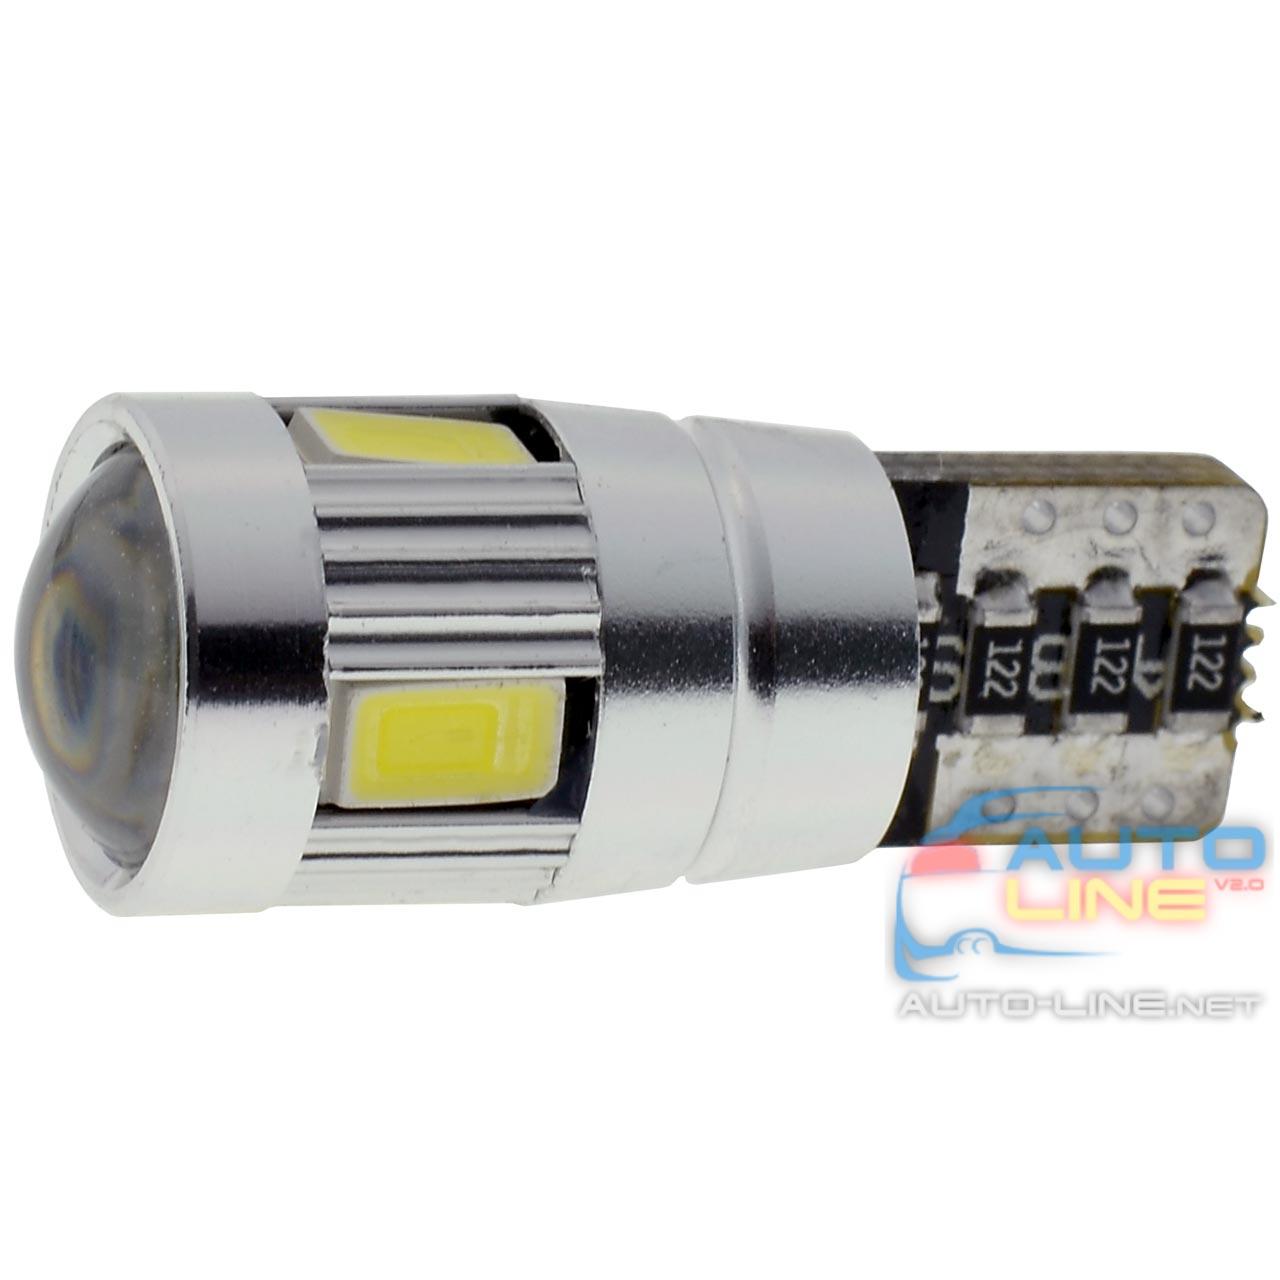 CAN LED-лампа W5W с обманкой - Cyclone T10-062 CAN 5630-6 12V SD